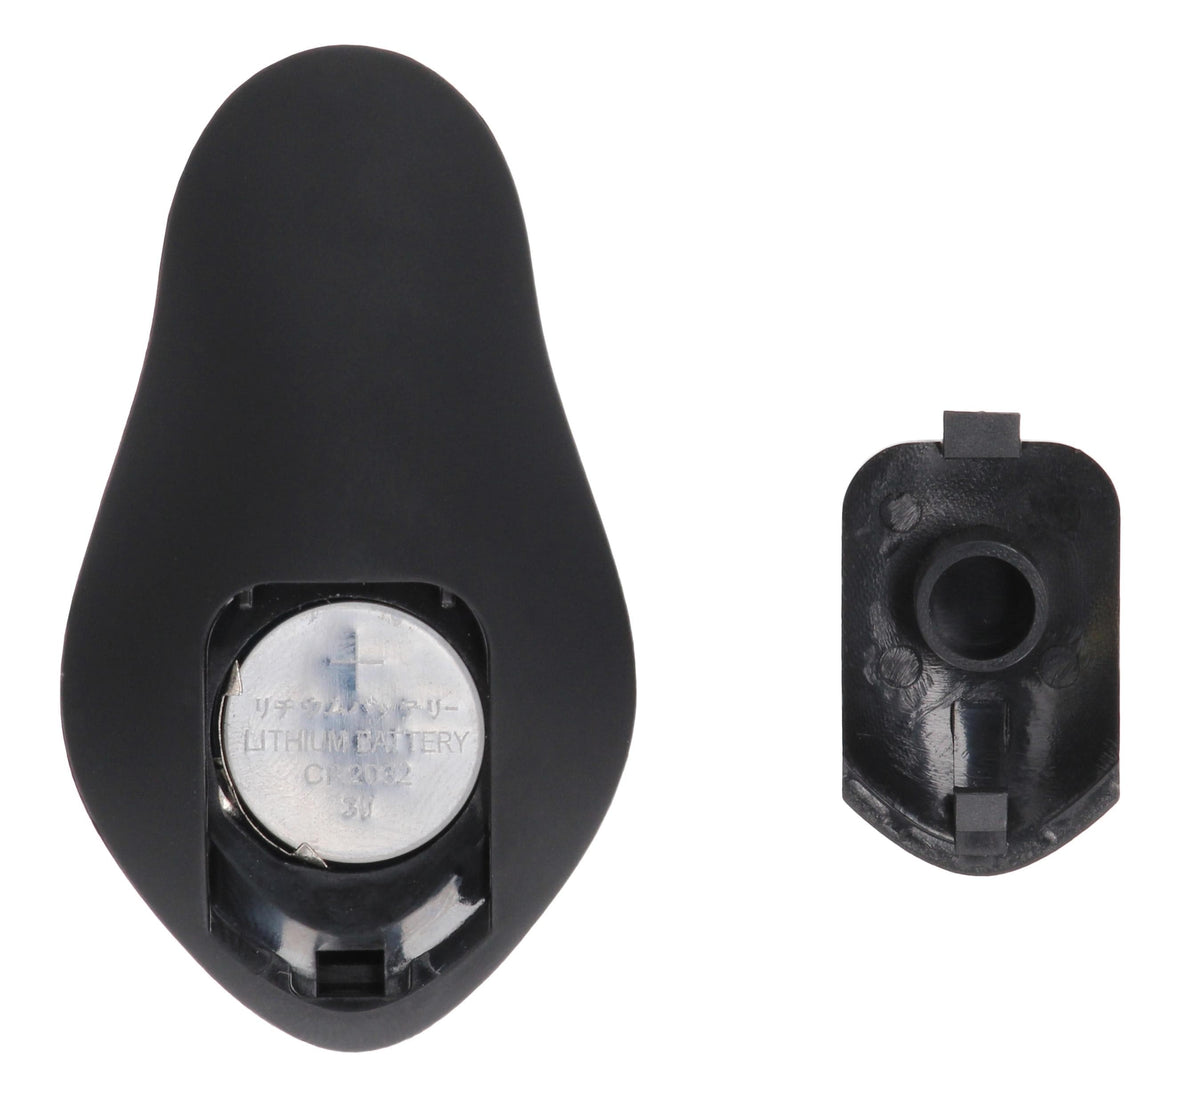 e stimulation and vibration butt plug with wireless remote control black